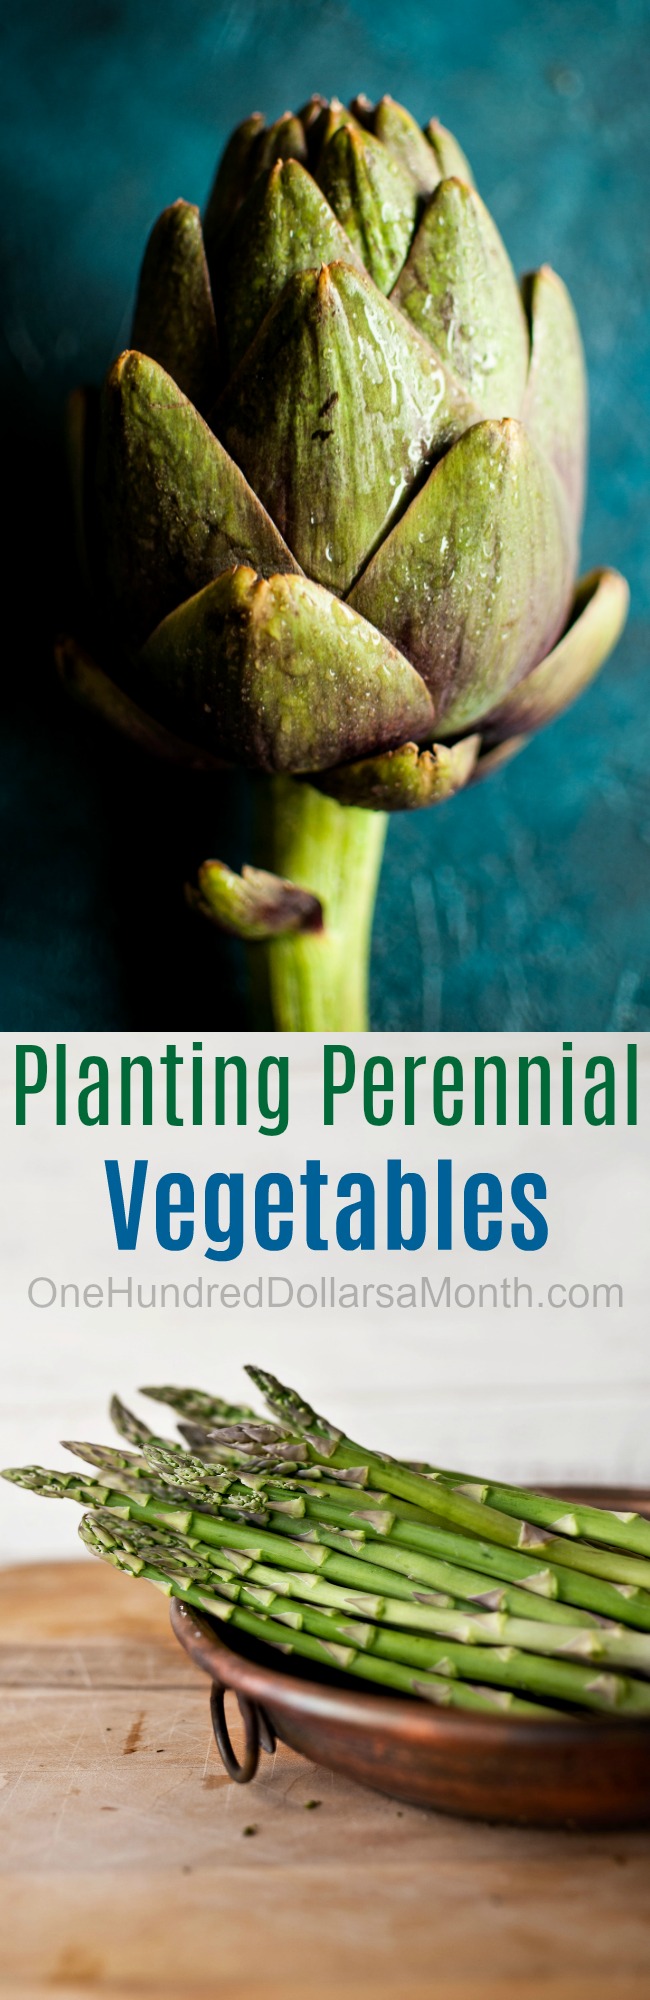 Planting Perennial Vegetables